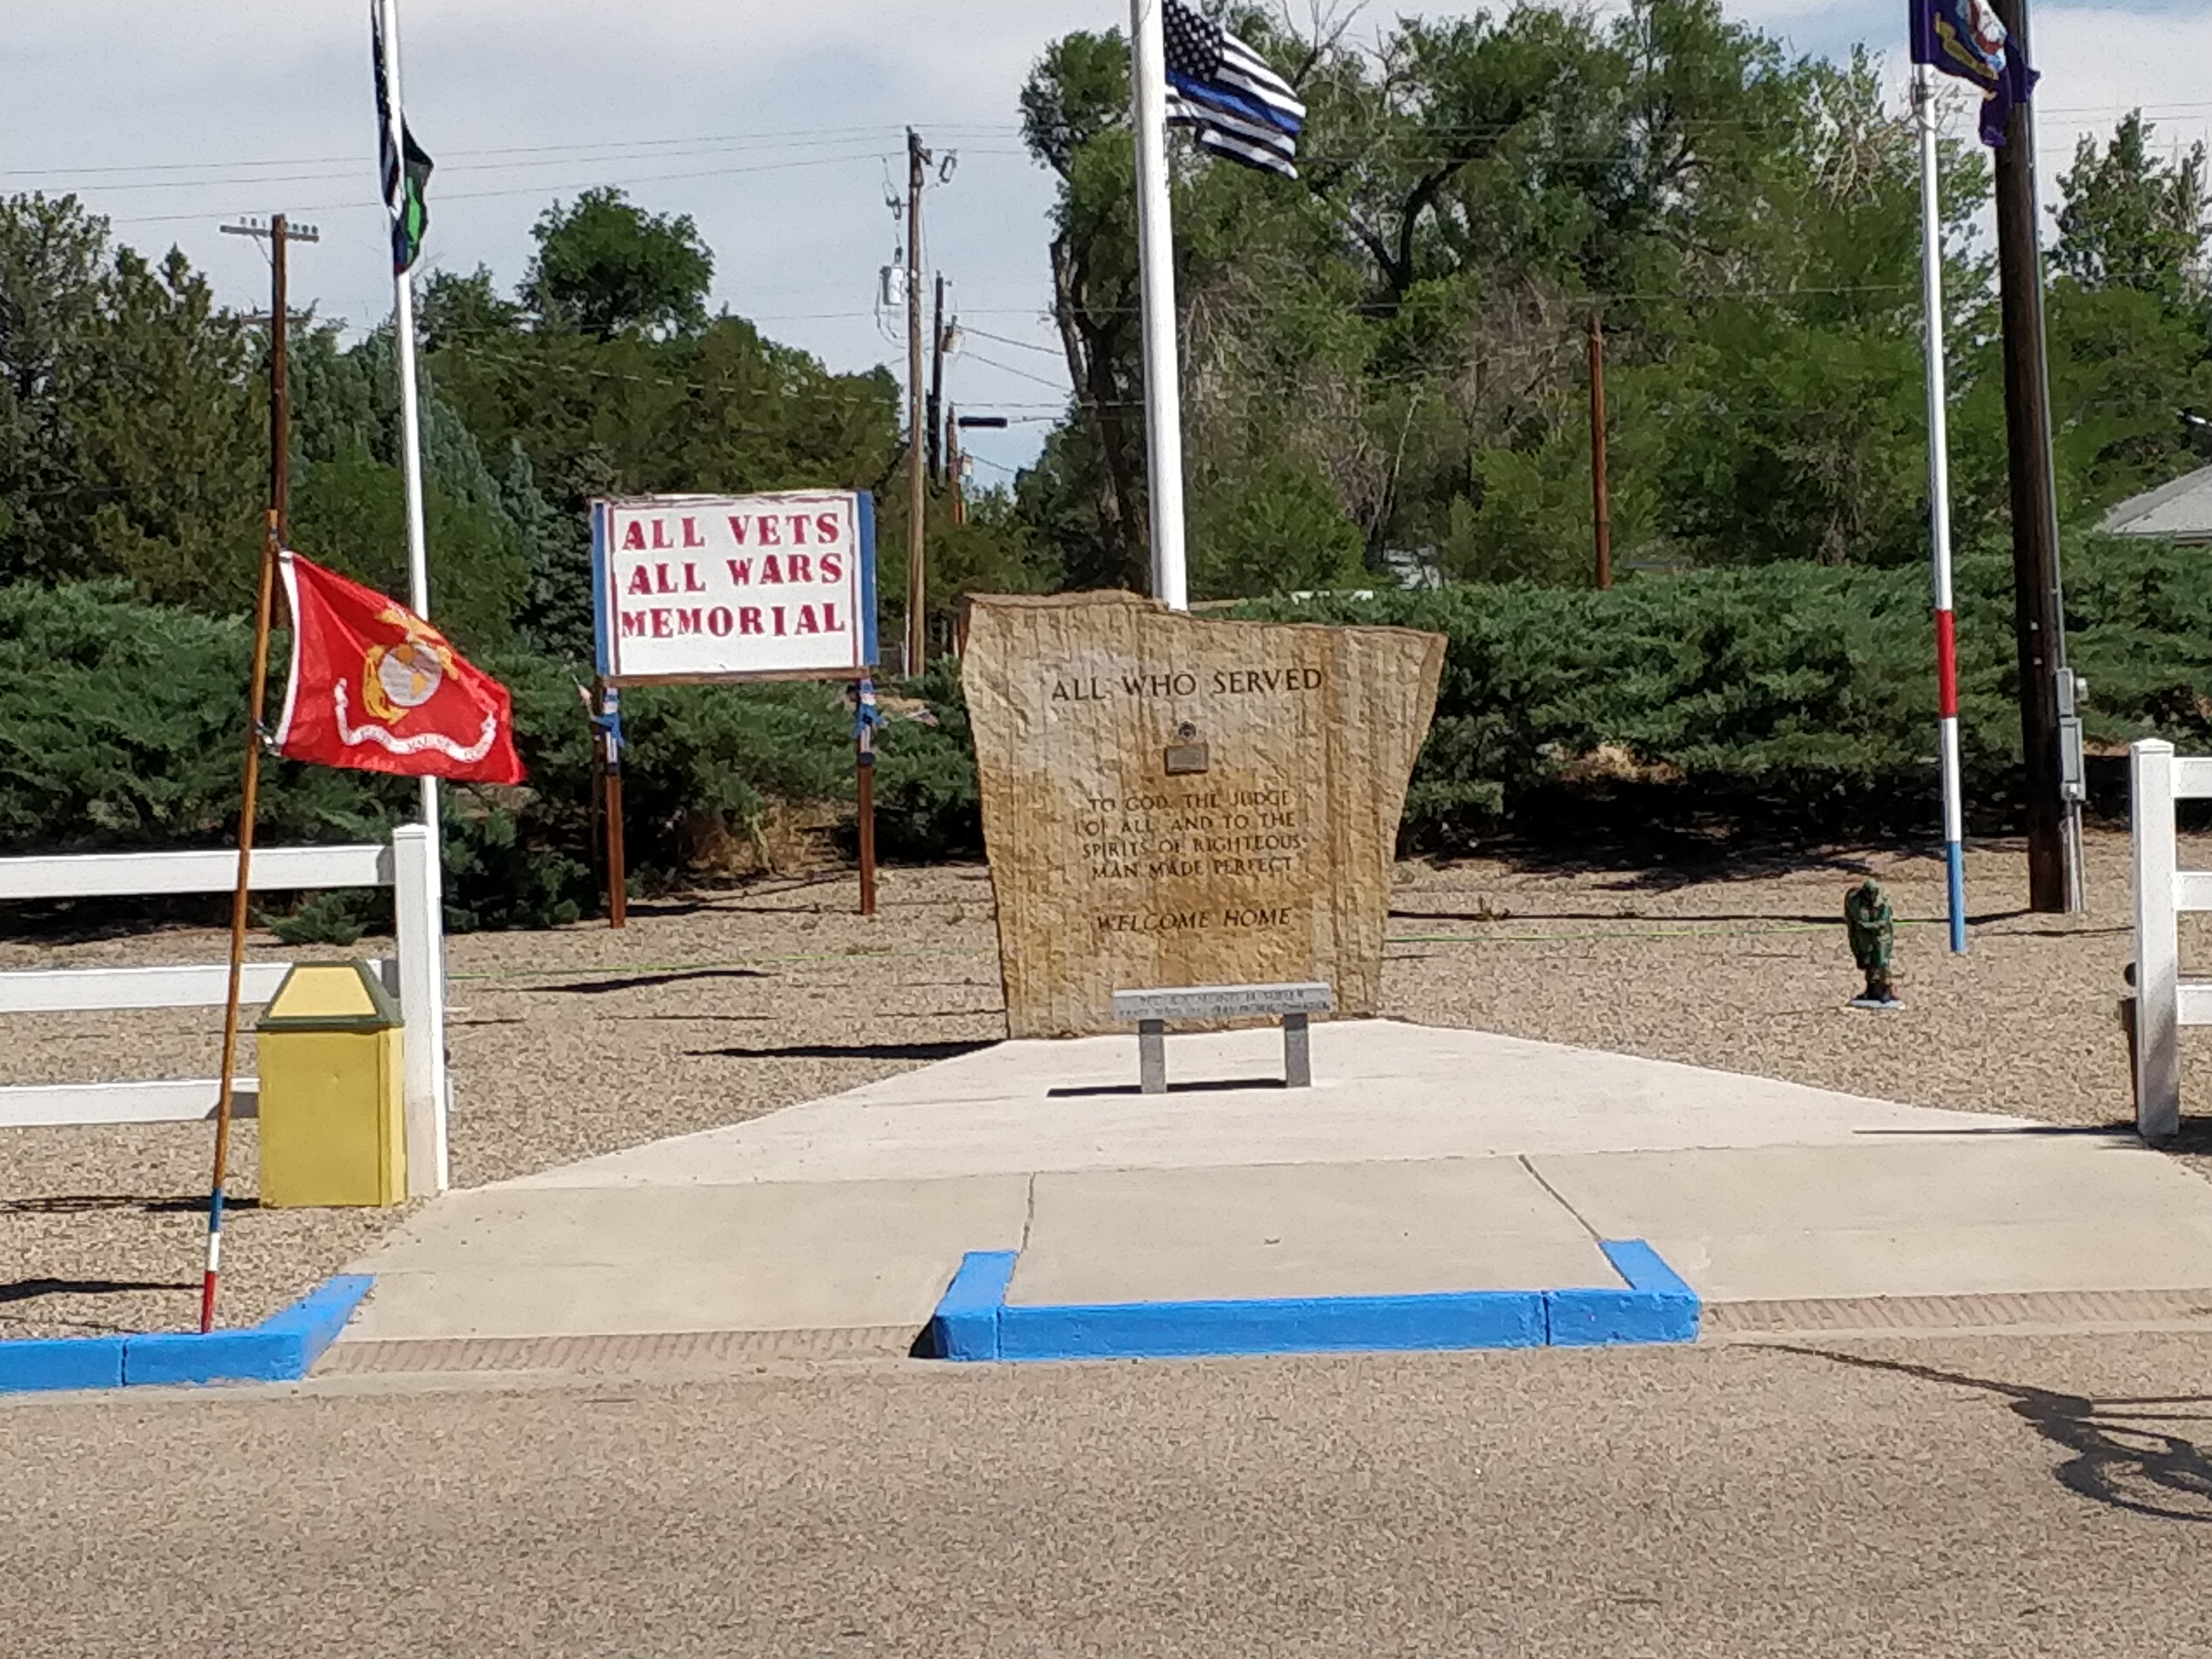 Olney Springs TX memorial to Veterans